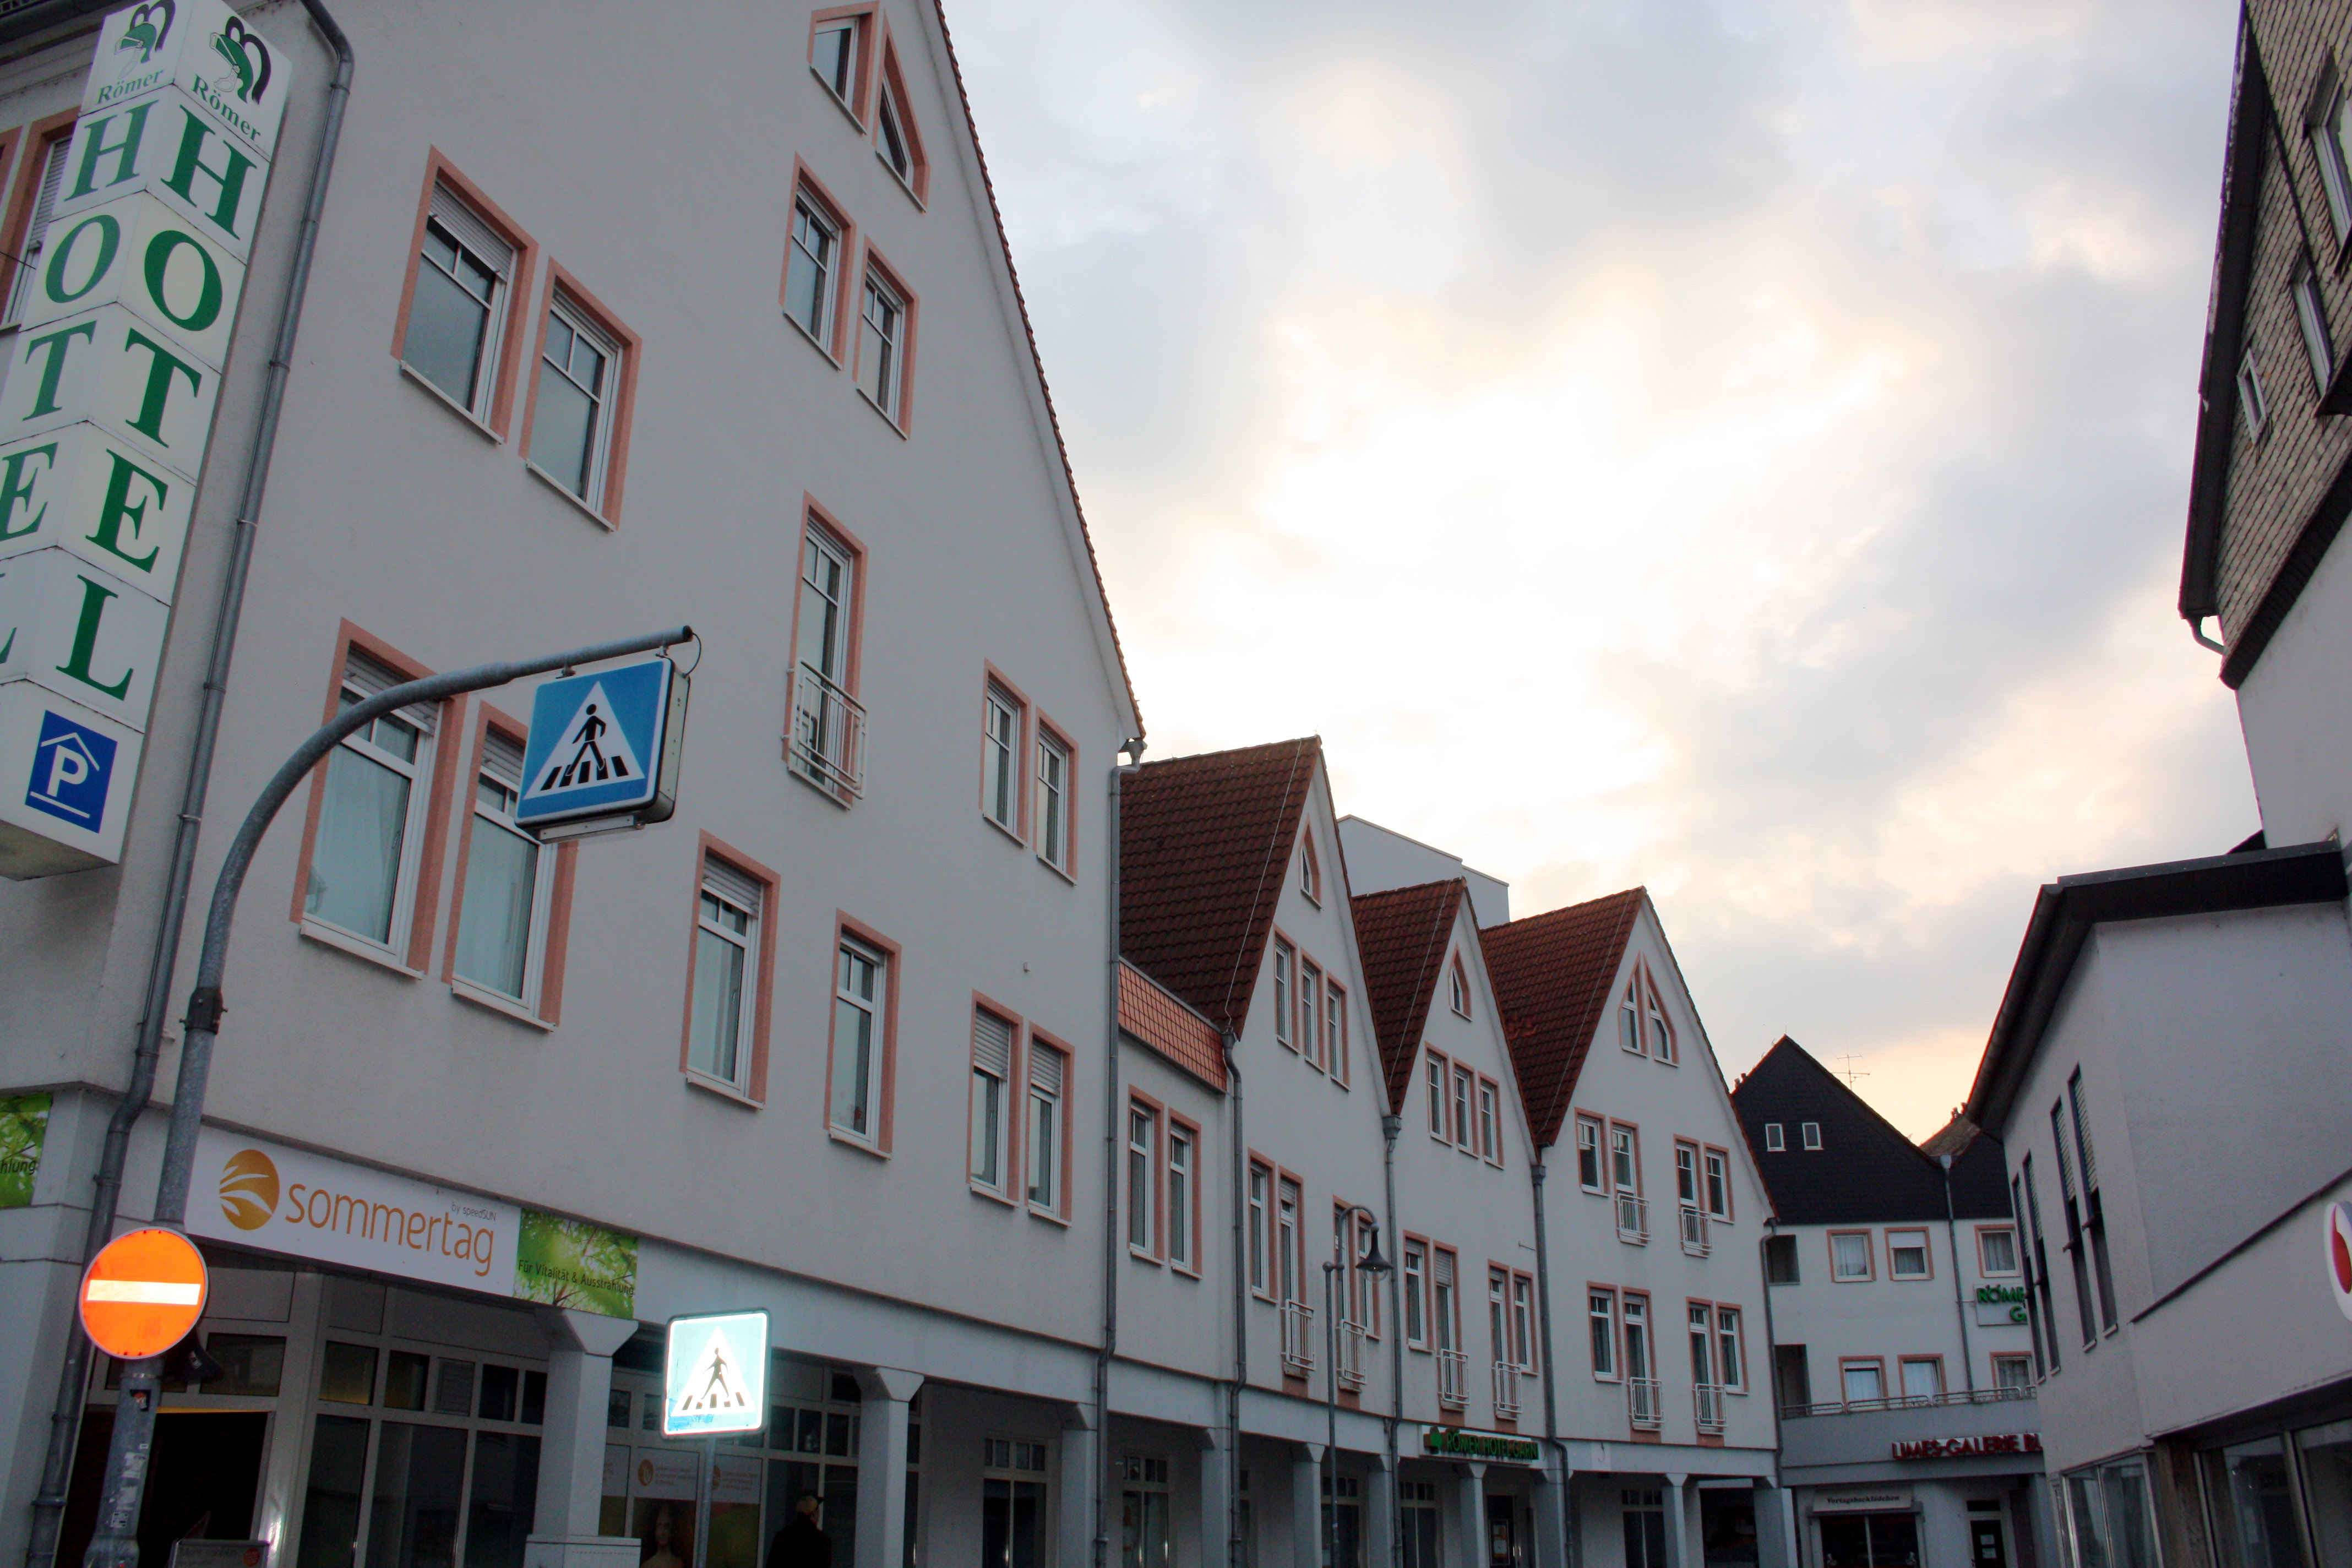 Hotel Römer, Butzbach.
